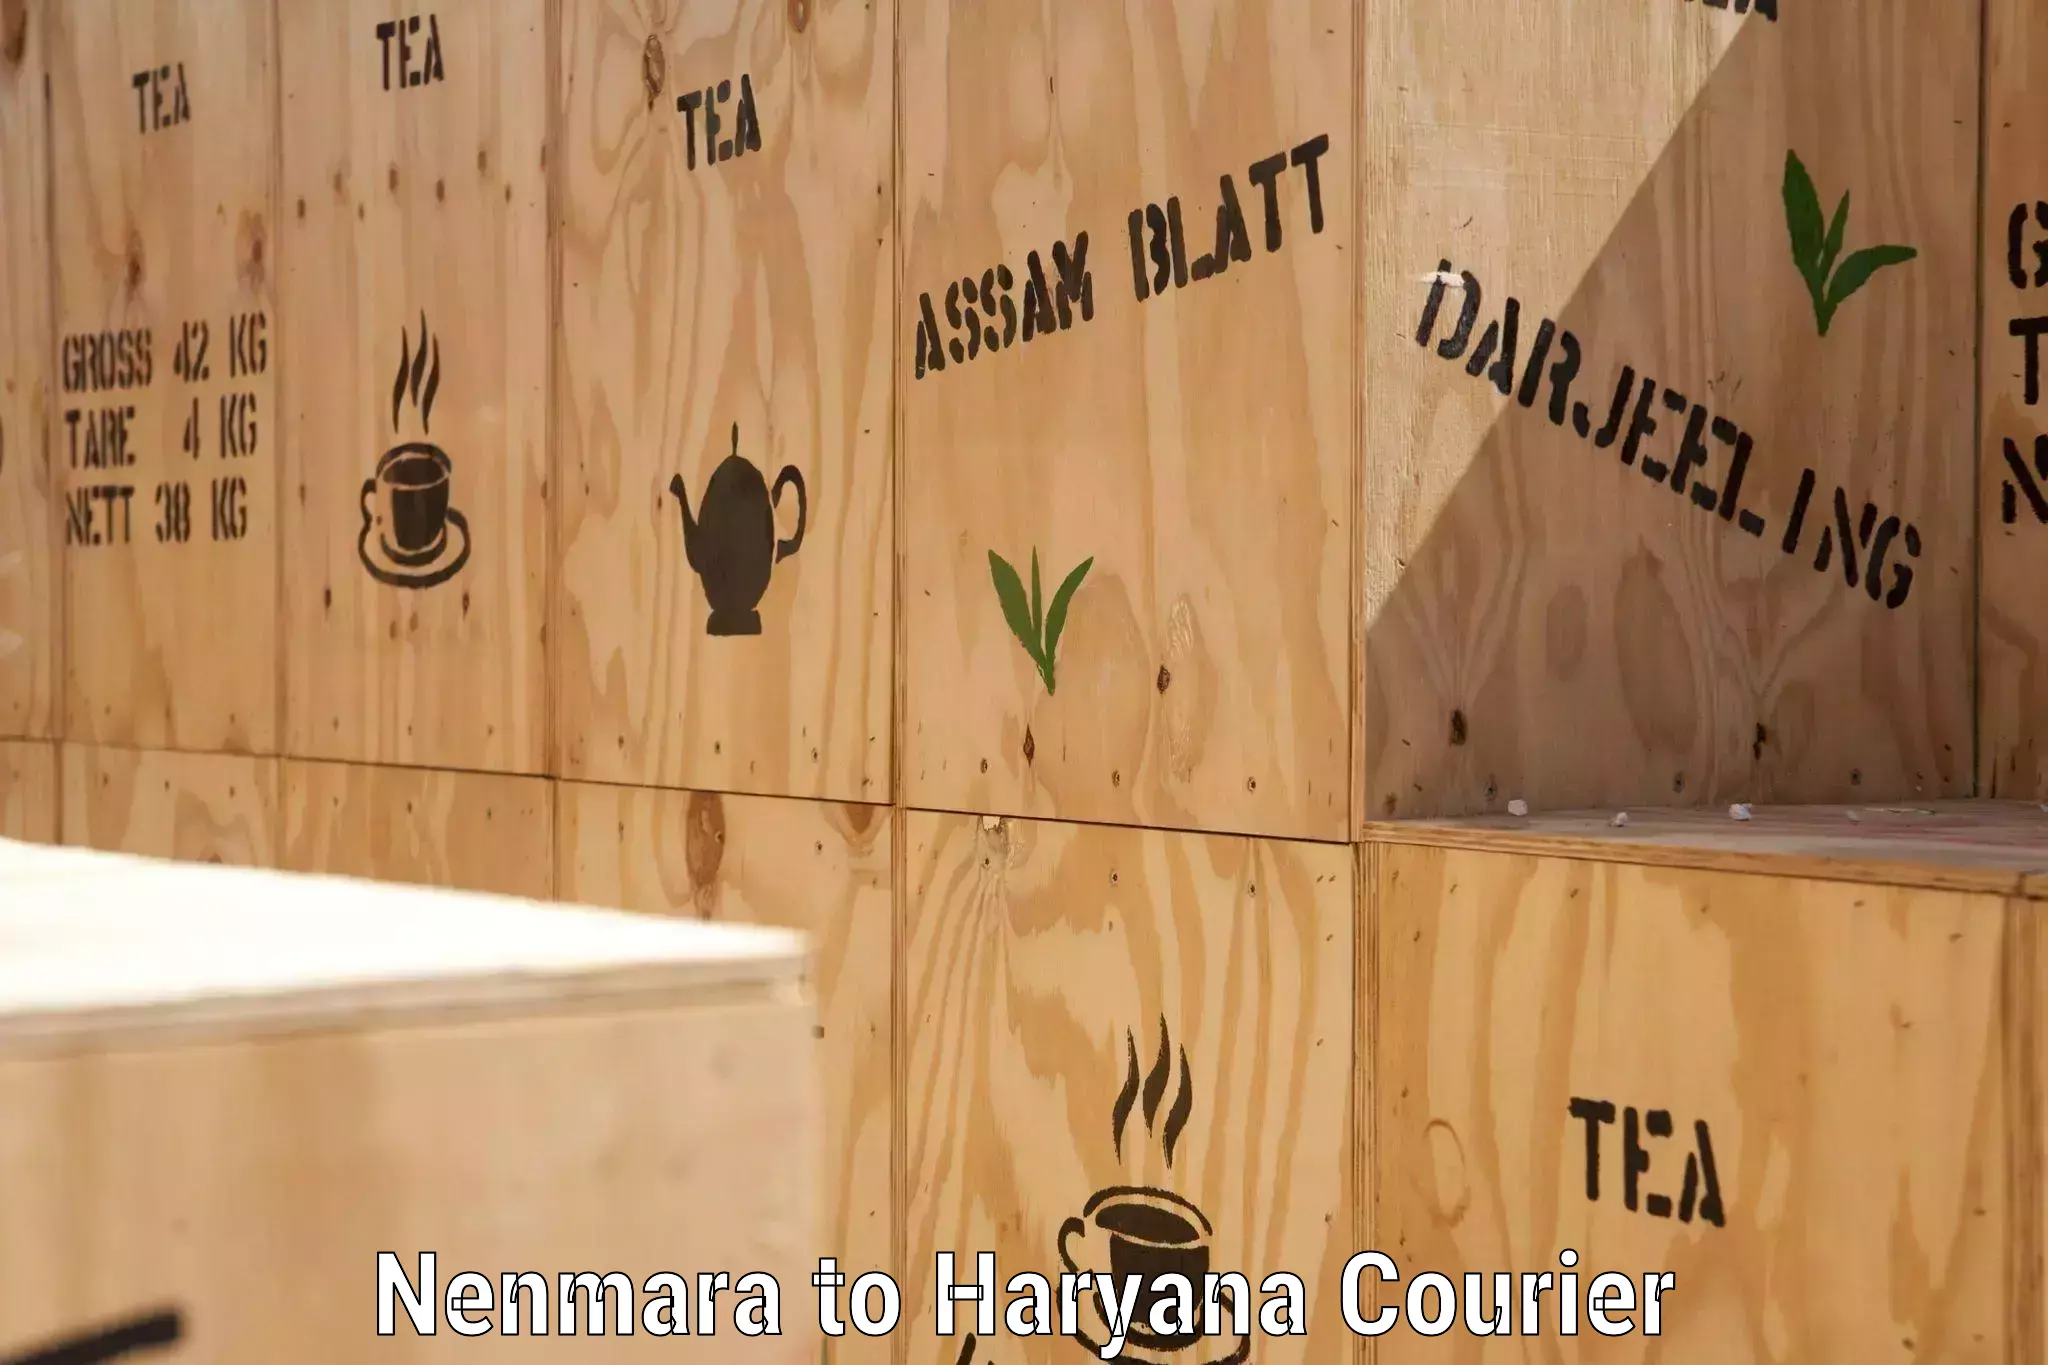 Budget-friendly shipping Nenmara to Hansi